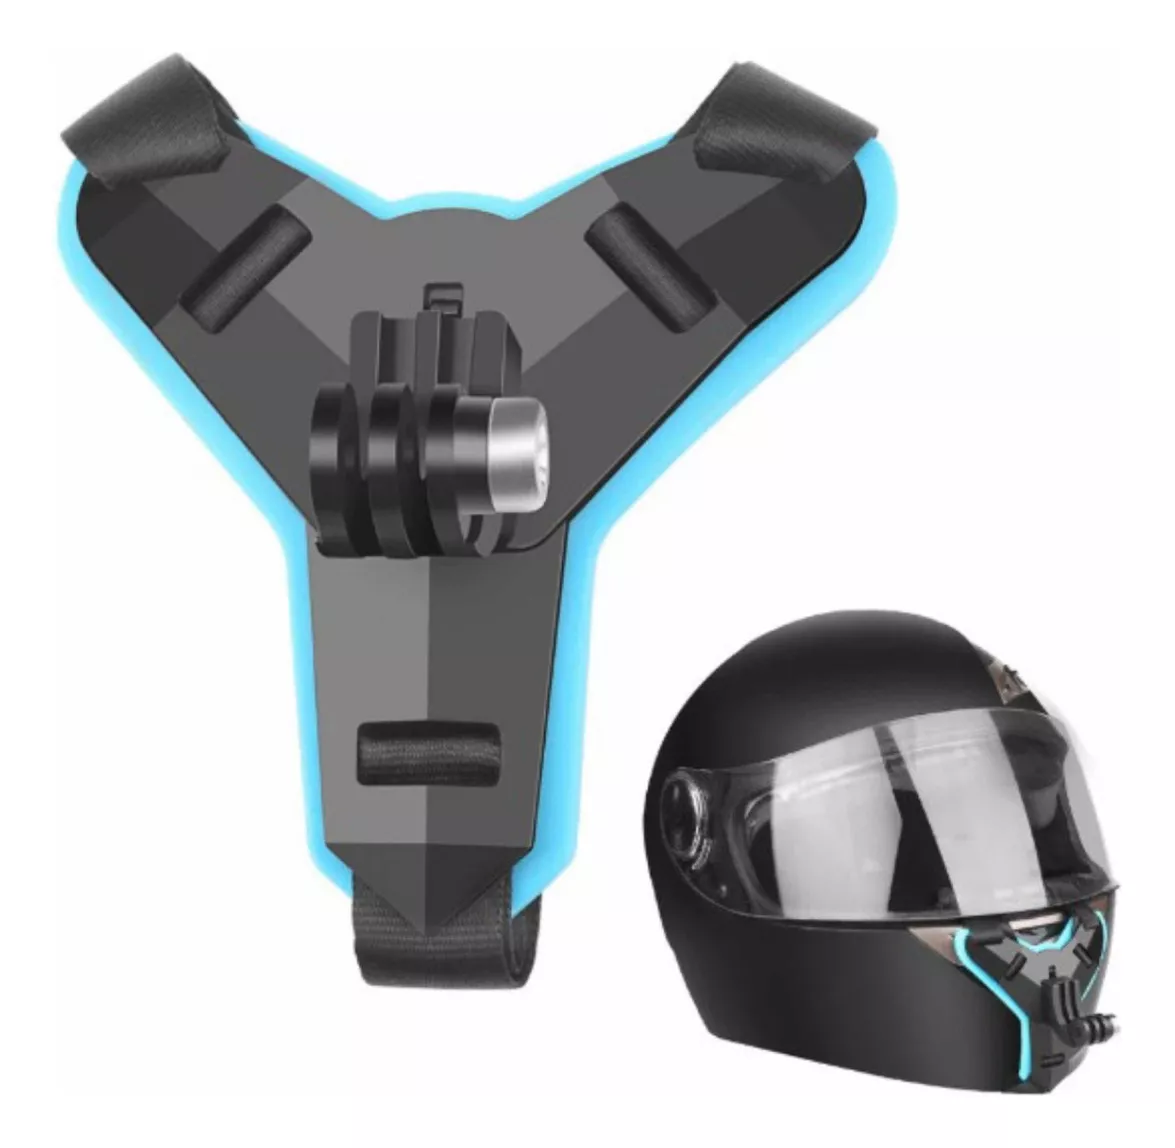 Segunda imagem para pesquisa de suporte de capacete gopro